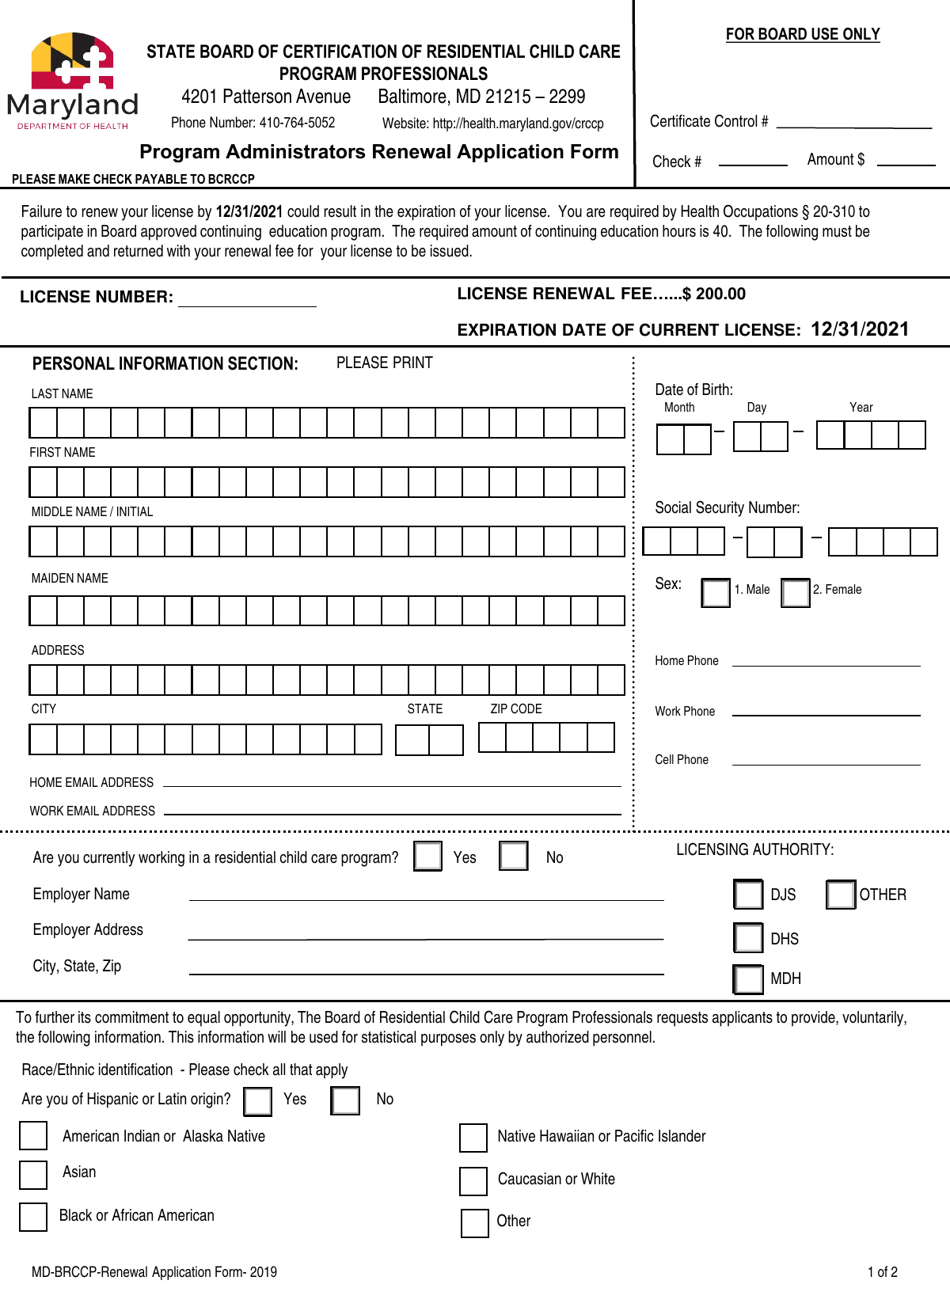 Program Administrators Renewal Application Form - Maryland, Page 1